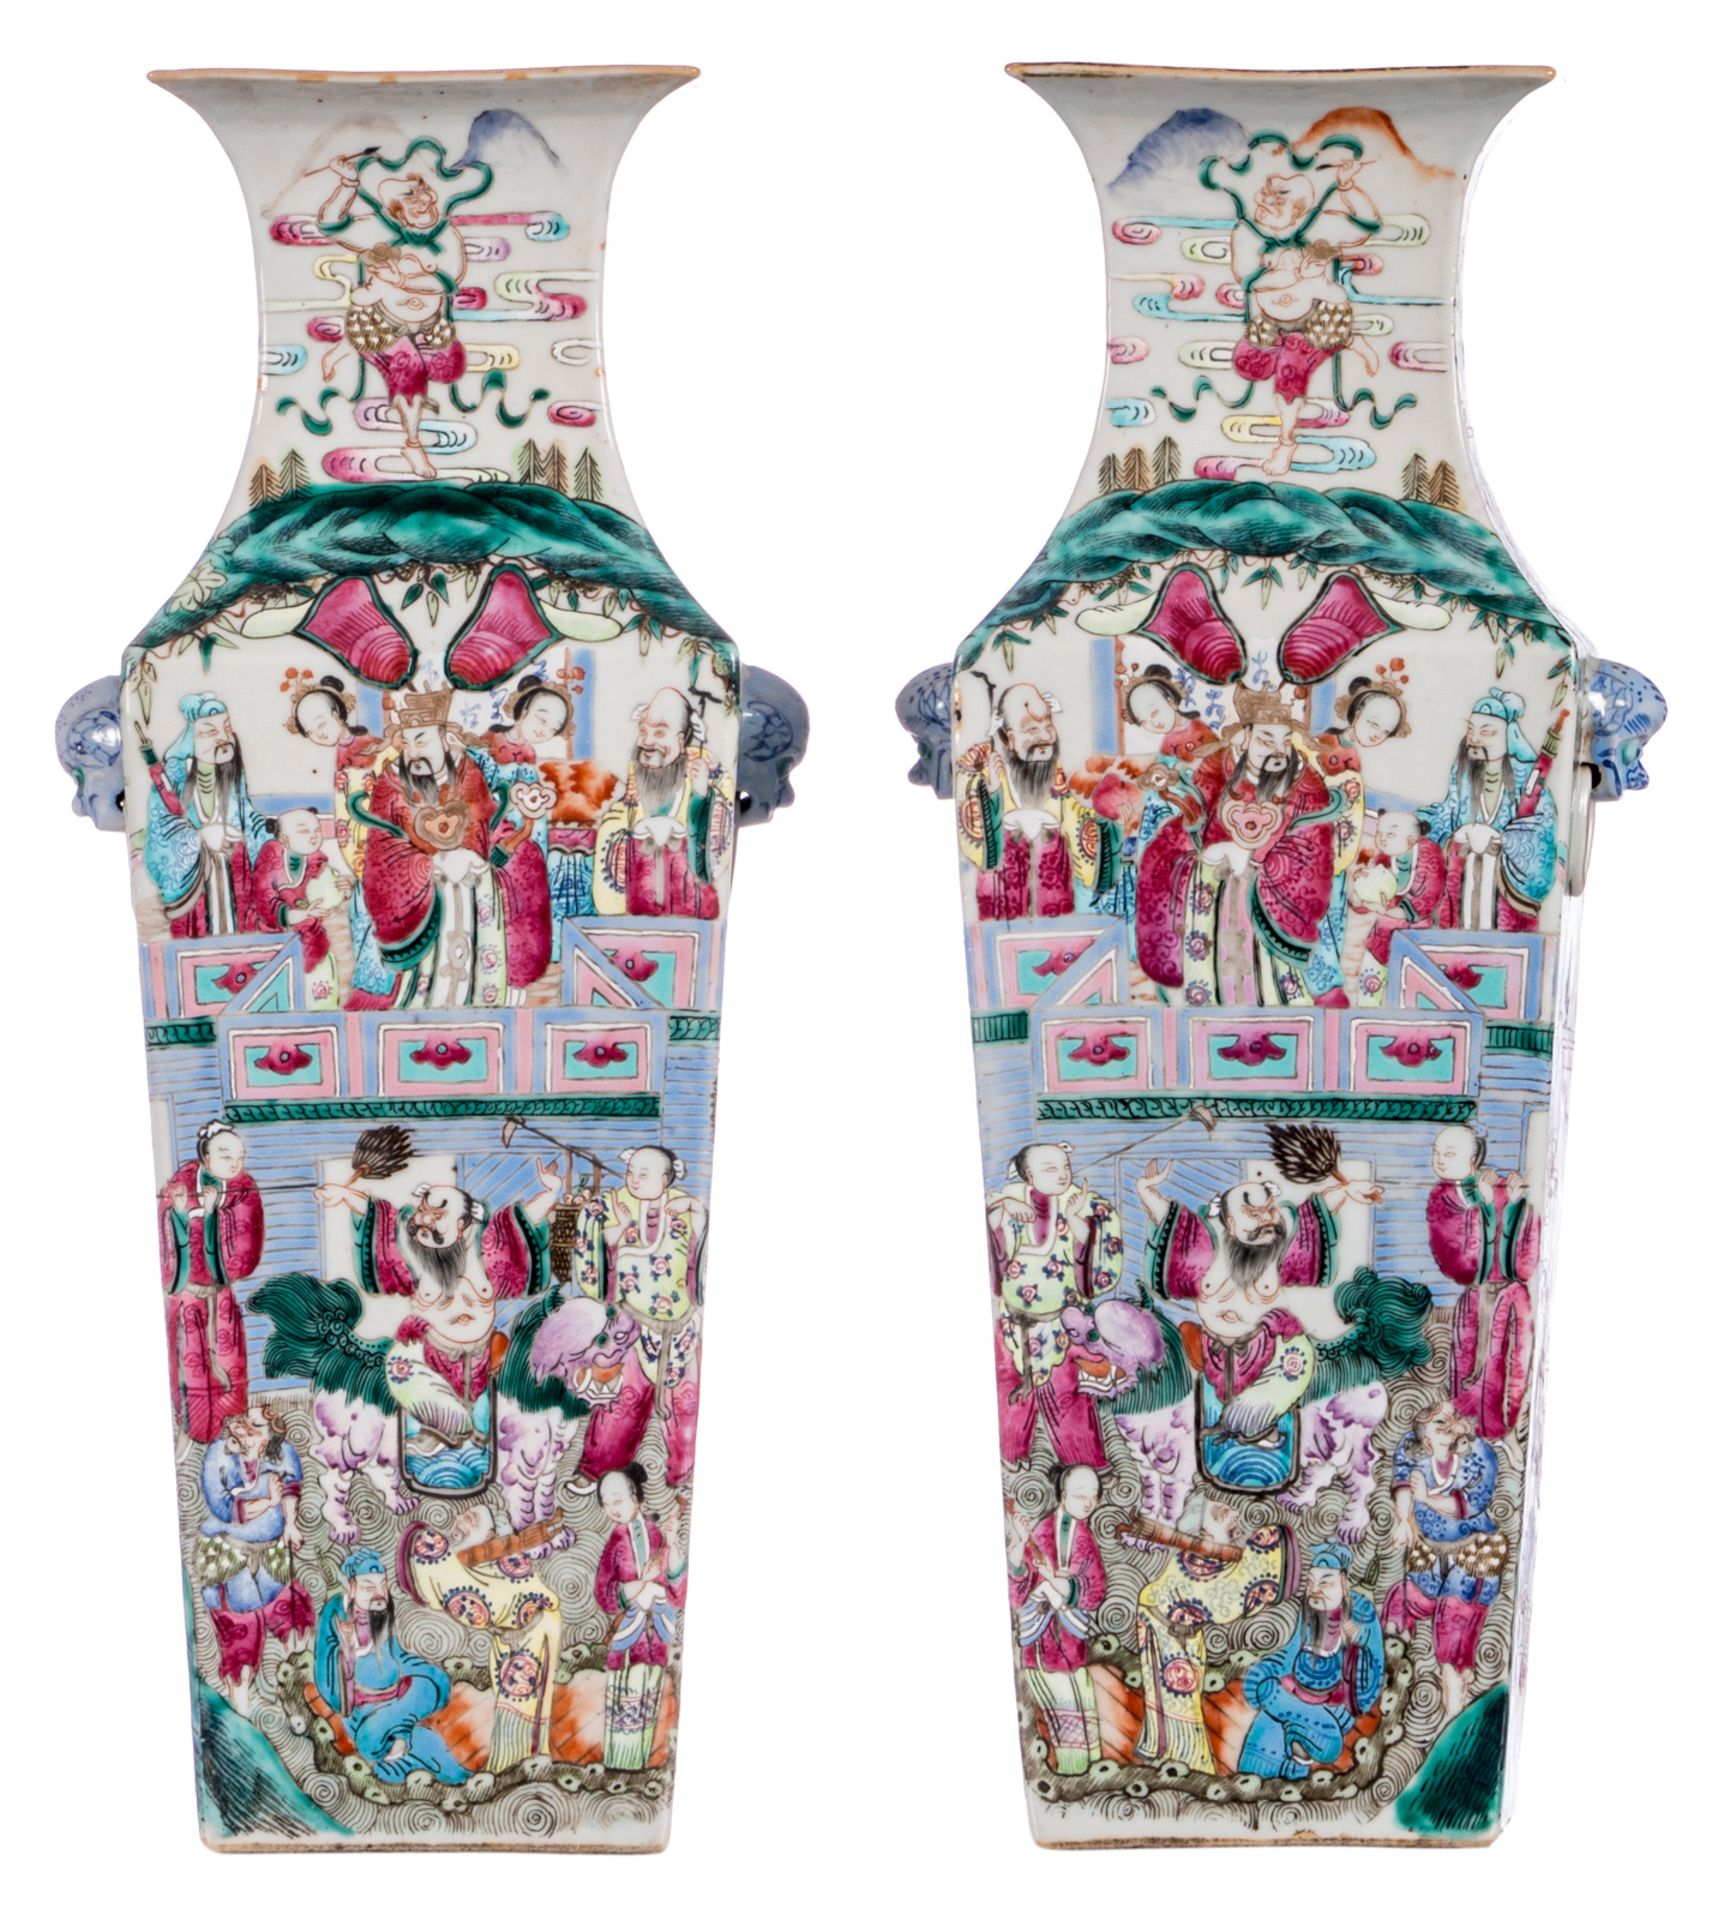 A pair of famille rose quadrangular vases, decorated with animated scenes and court scenes, 19thC, H